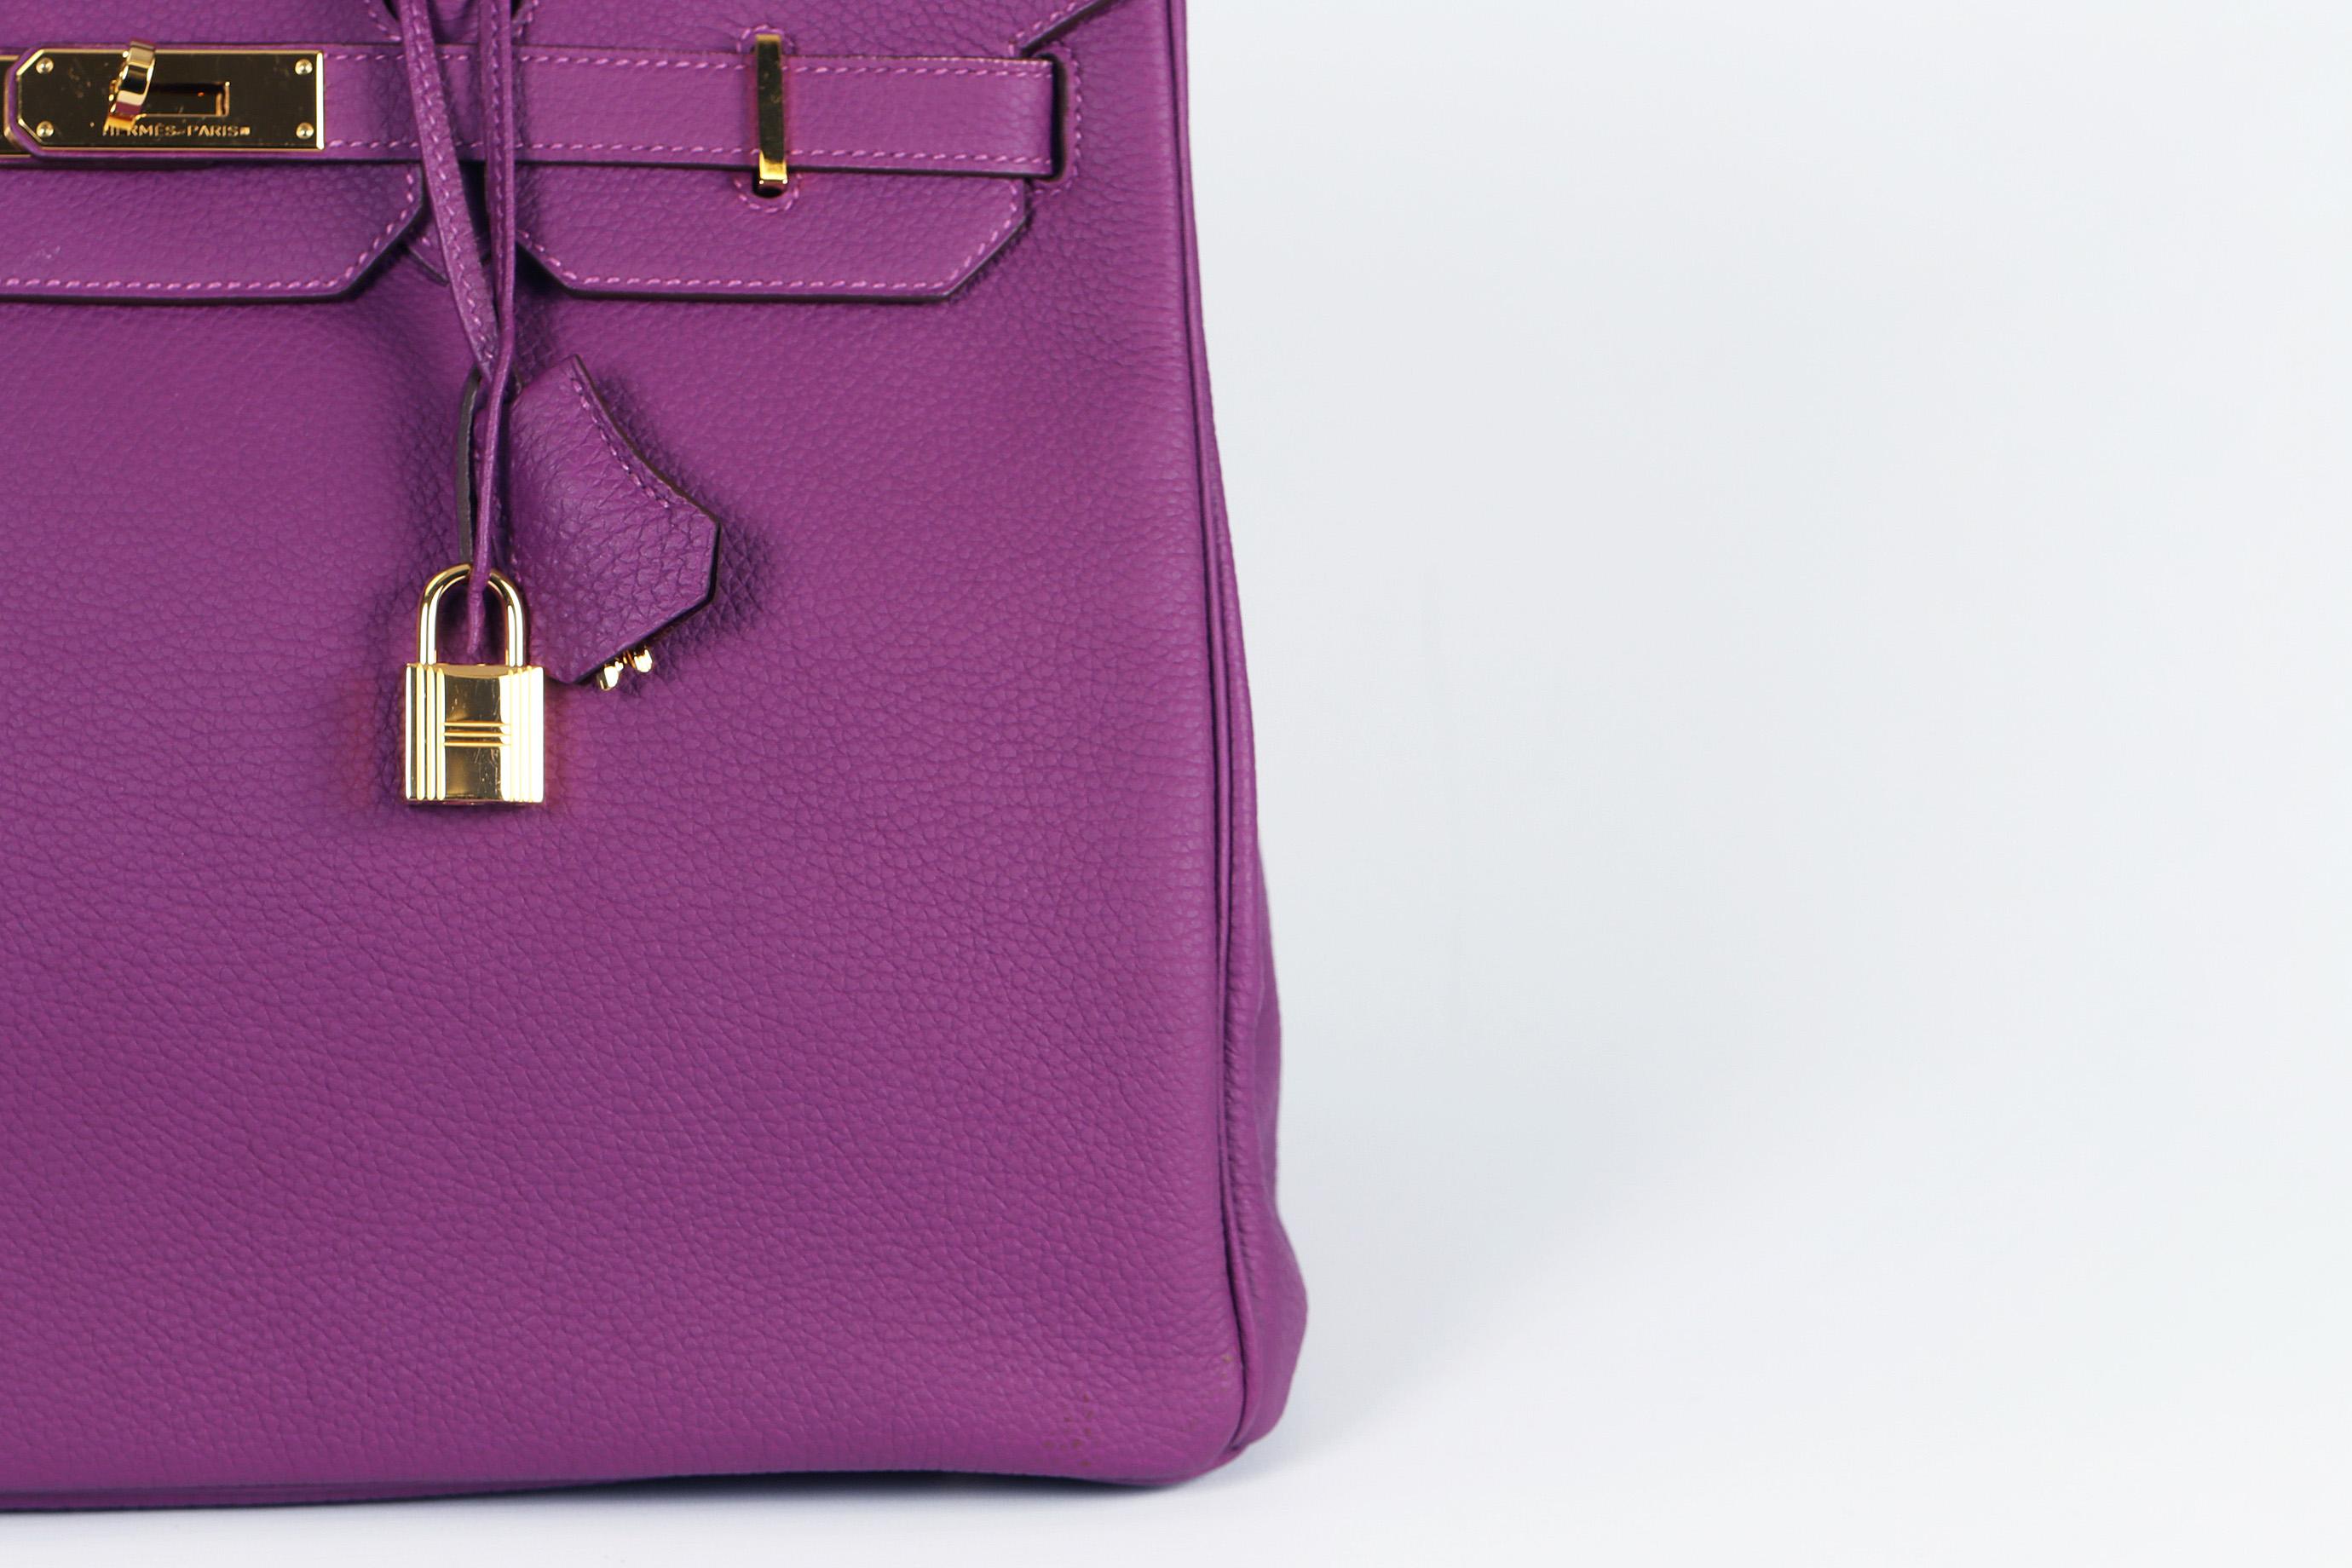 Hermès 2014 Birkin 35cm Togo Leather Bag For Sale 9